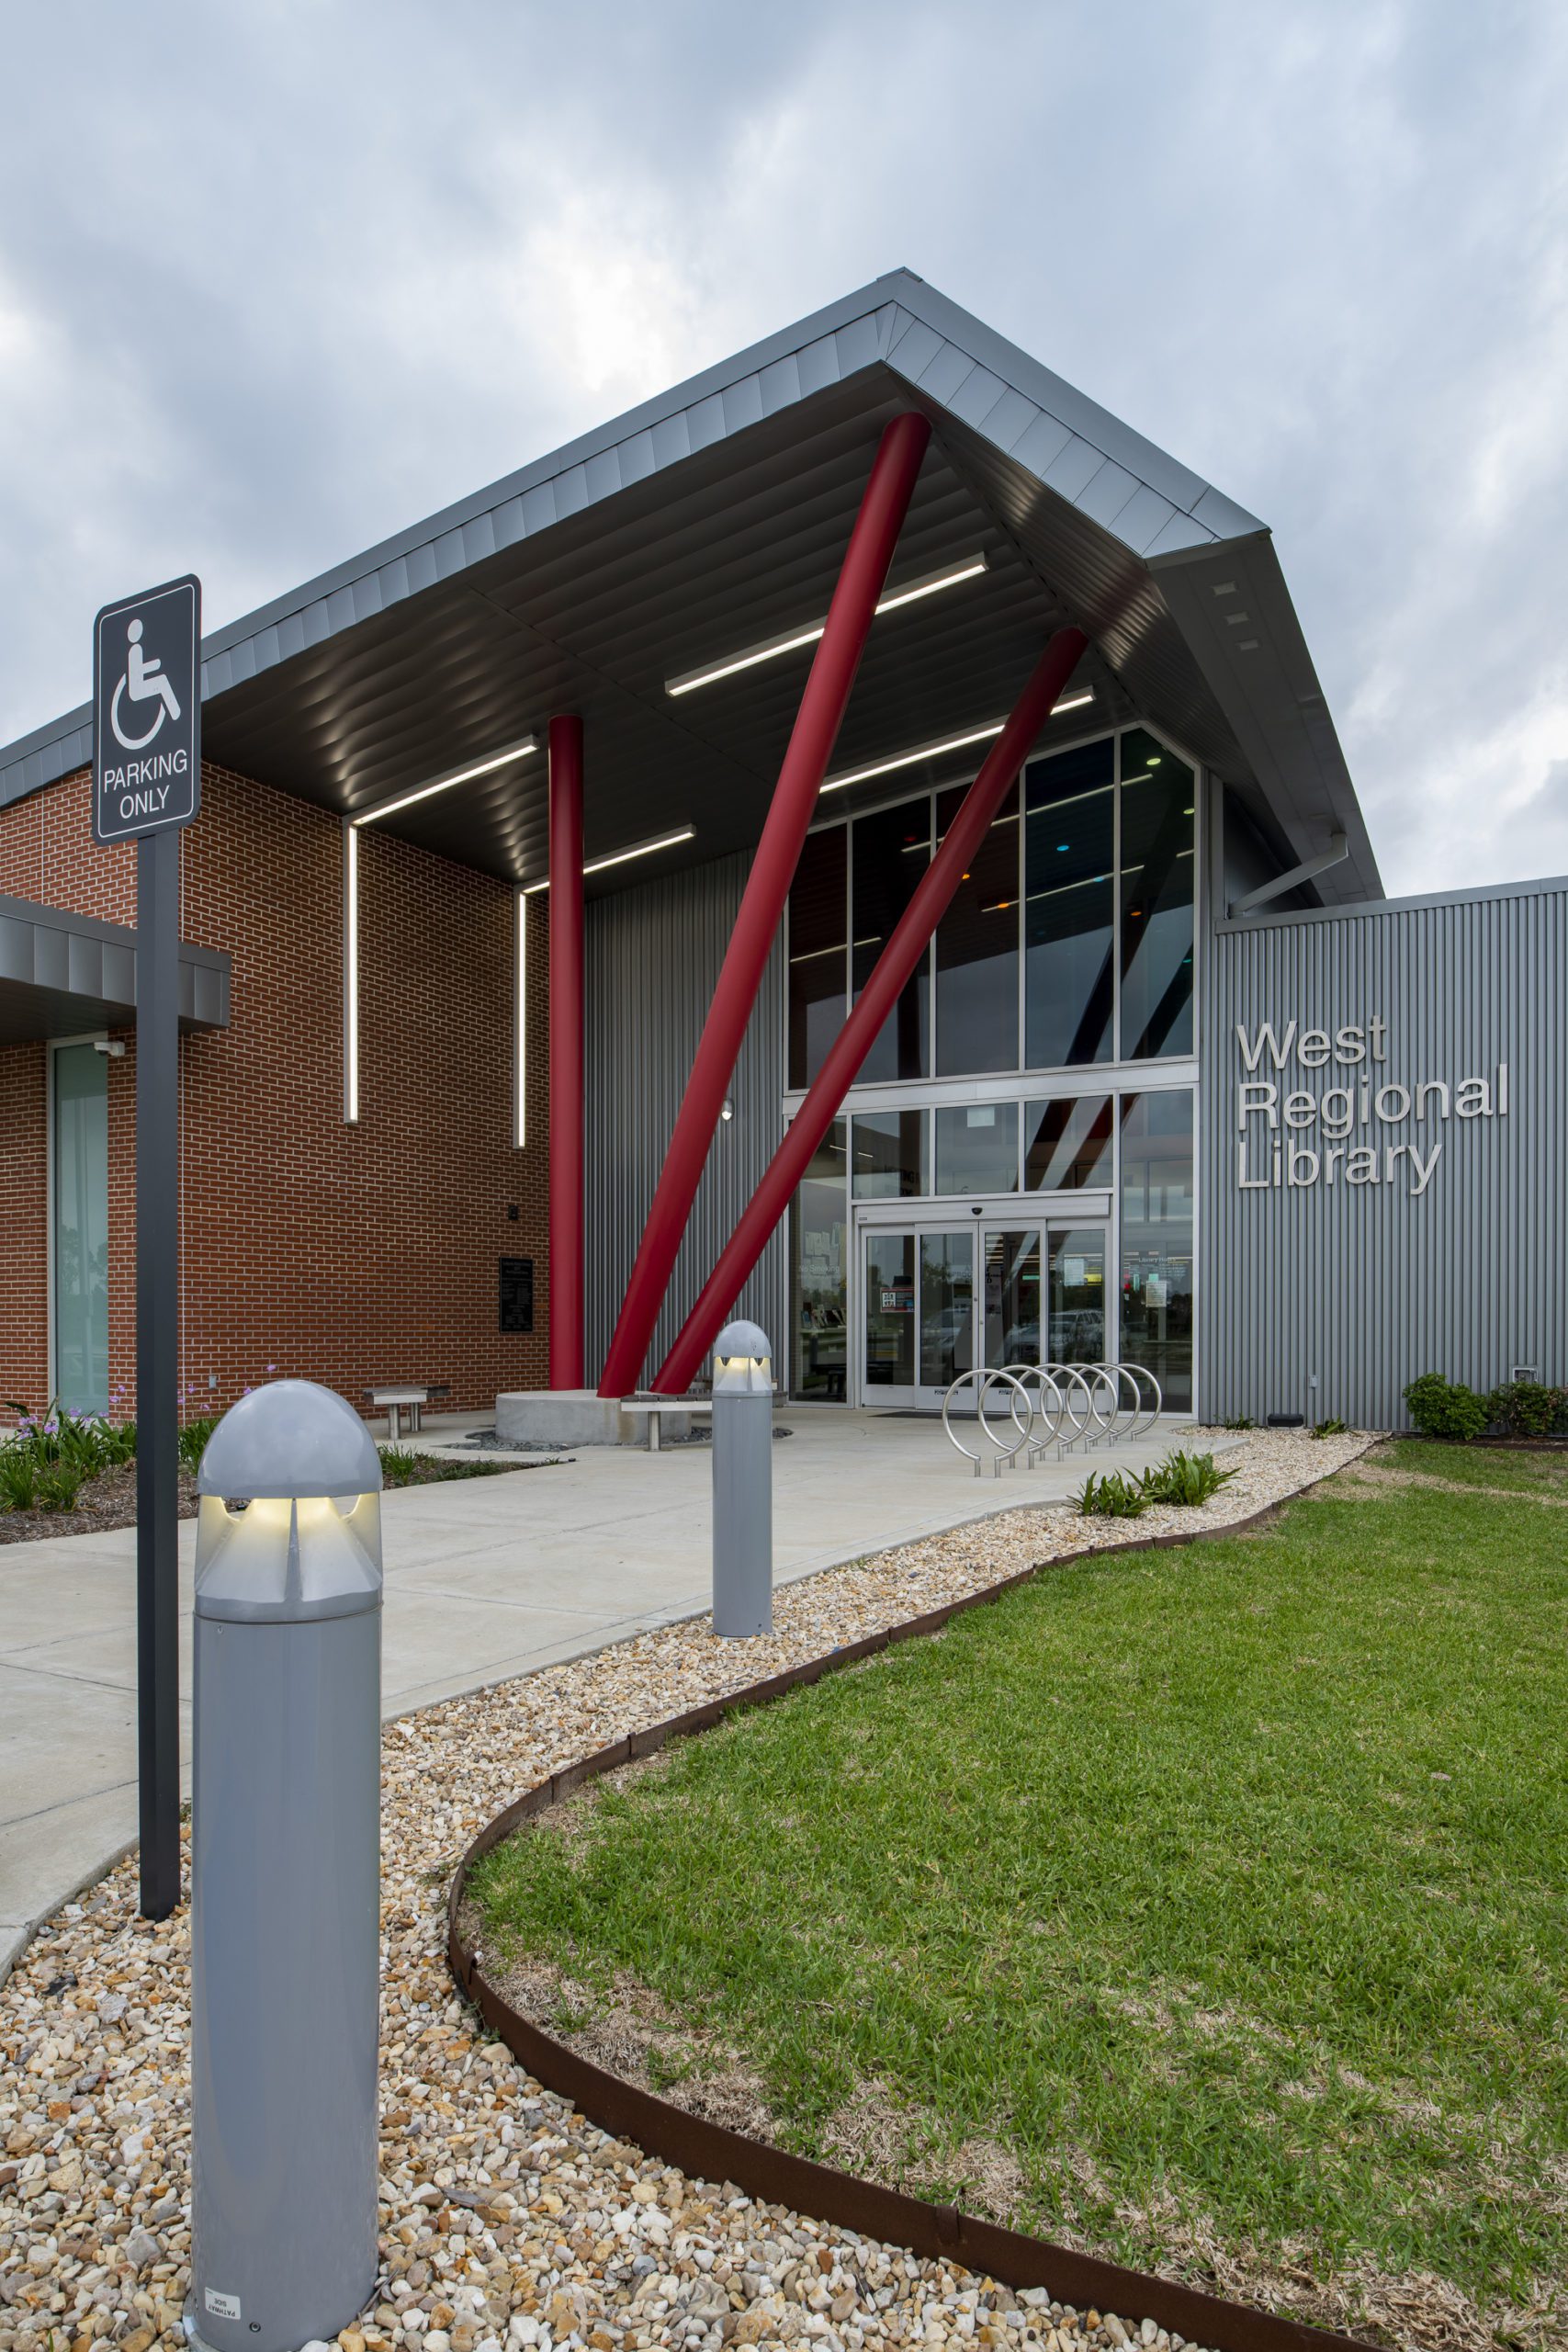 West Regional Library